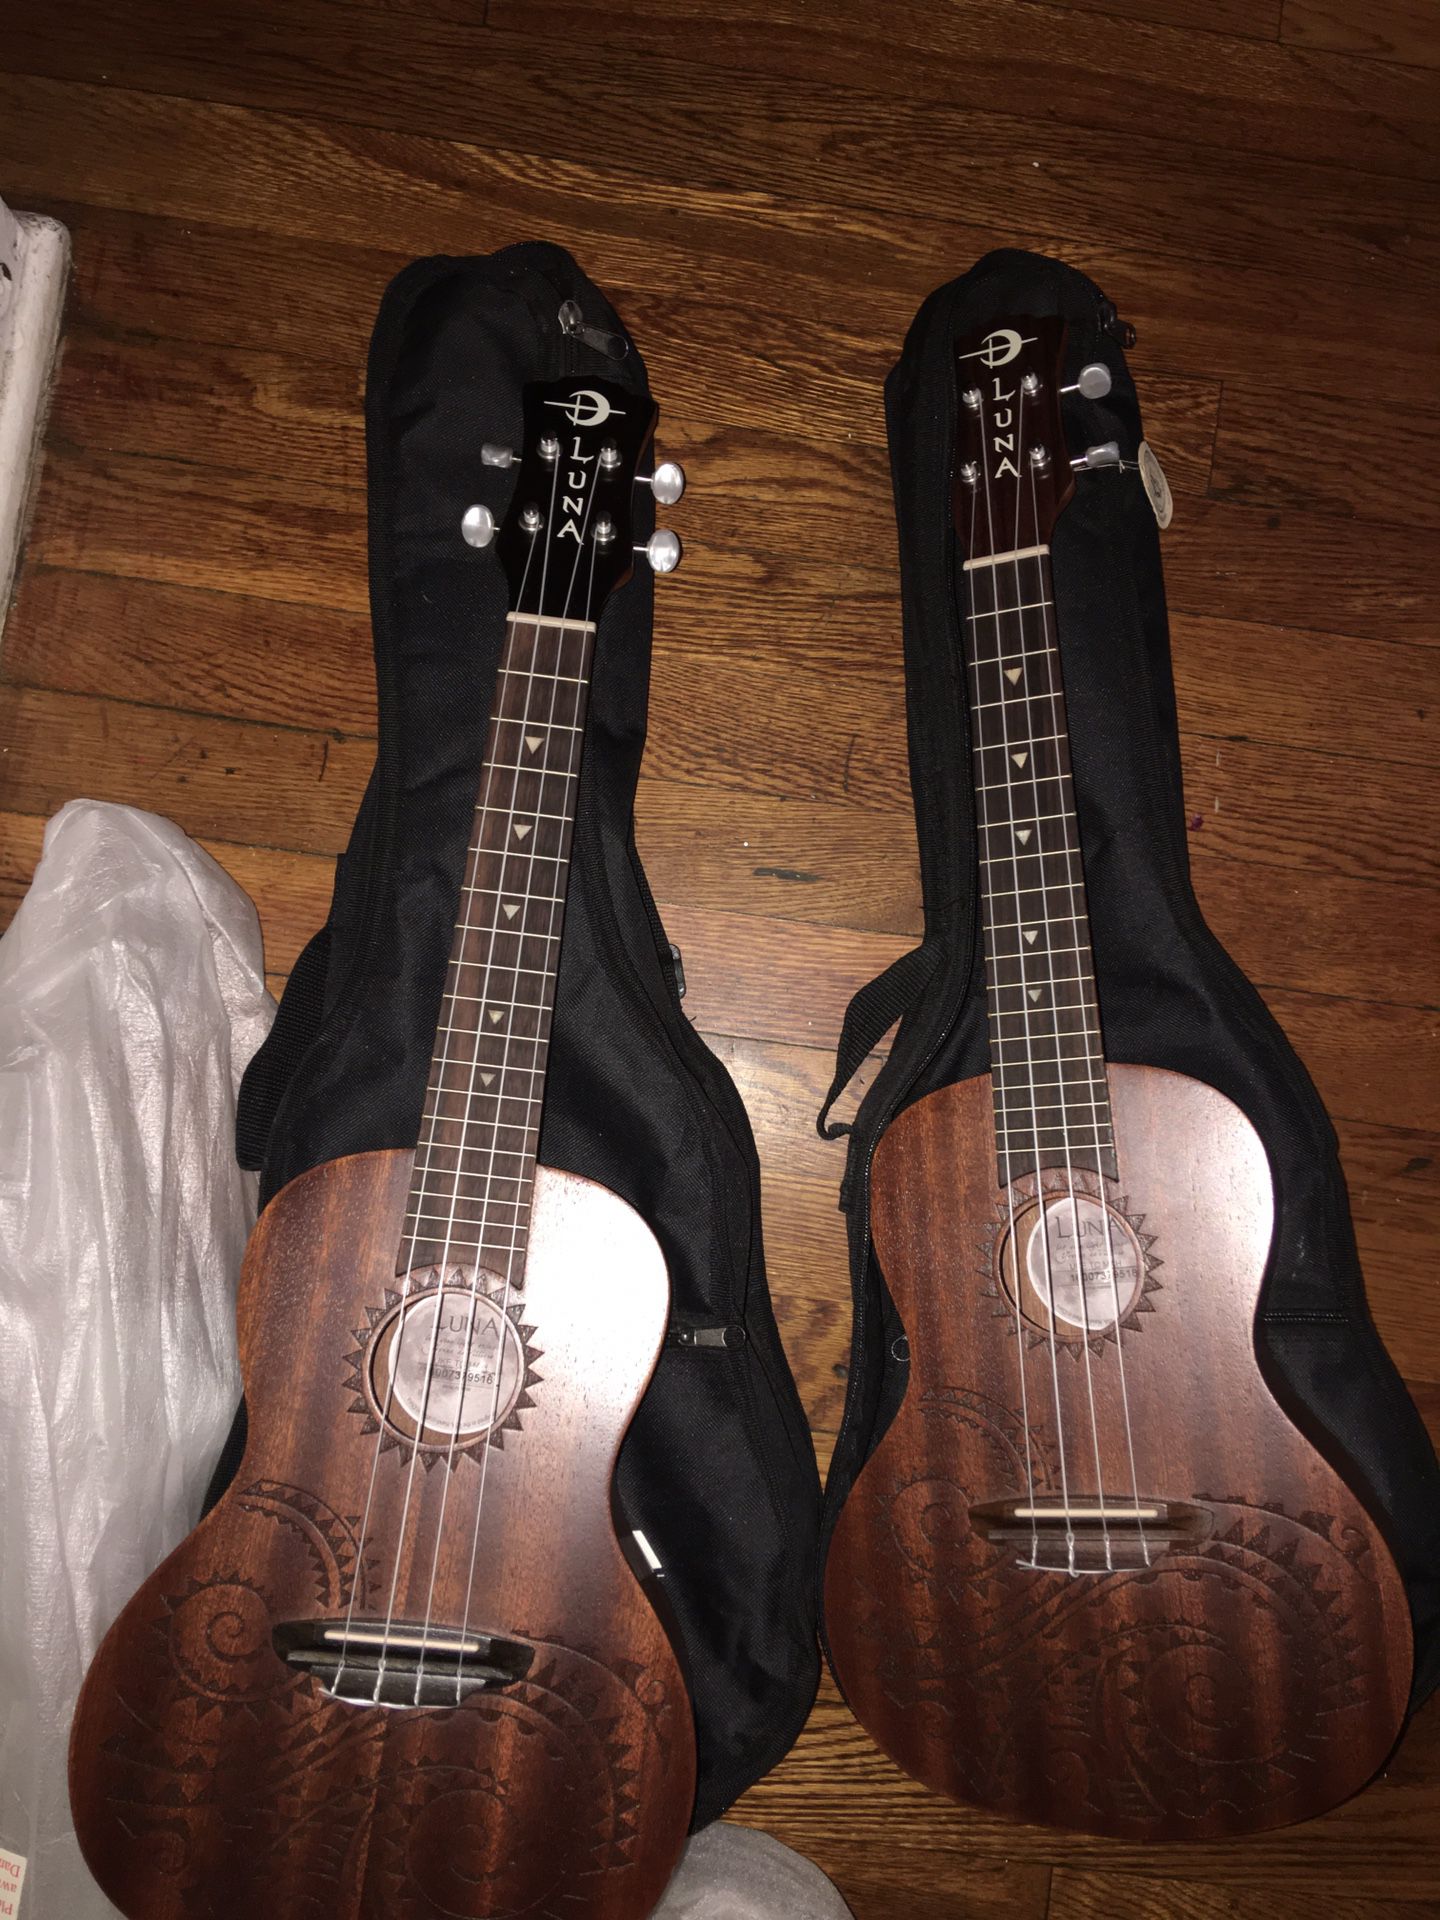 Dos guitarras $50 por las dos